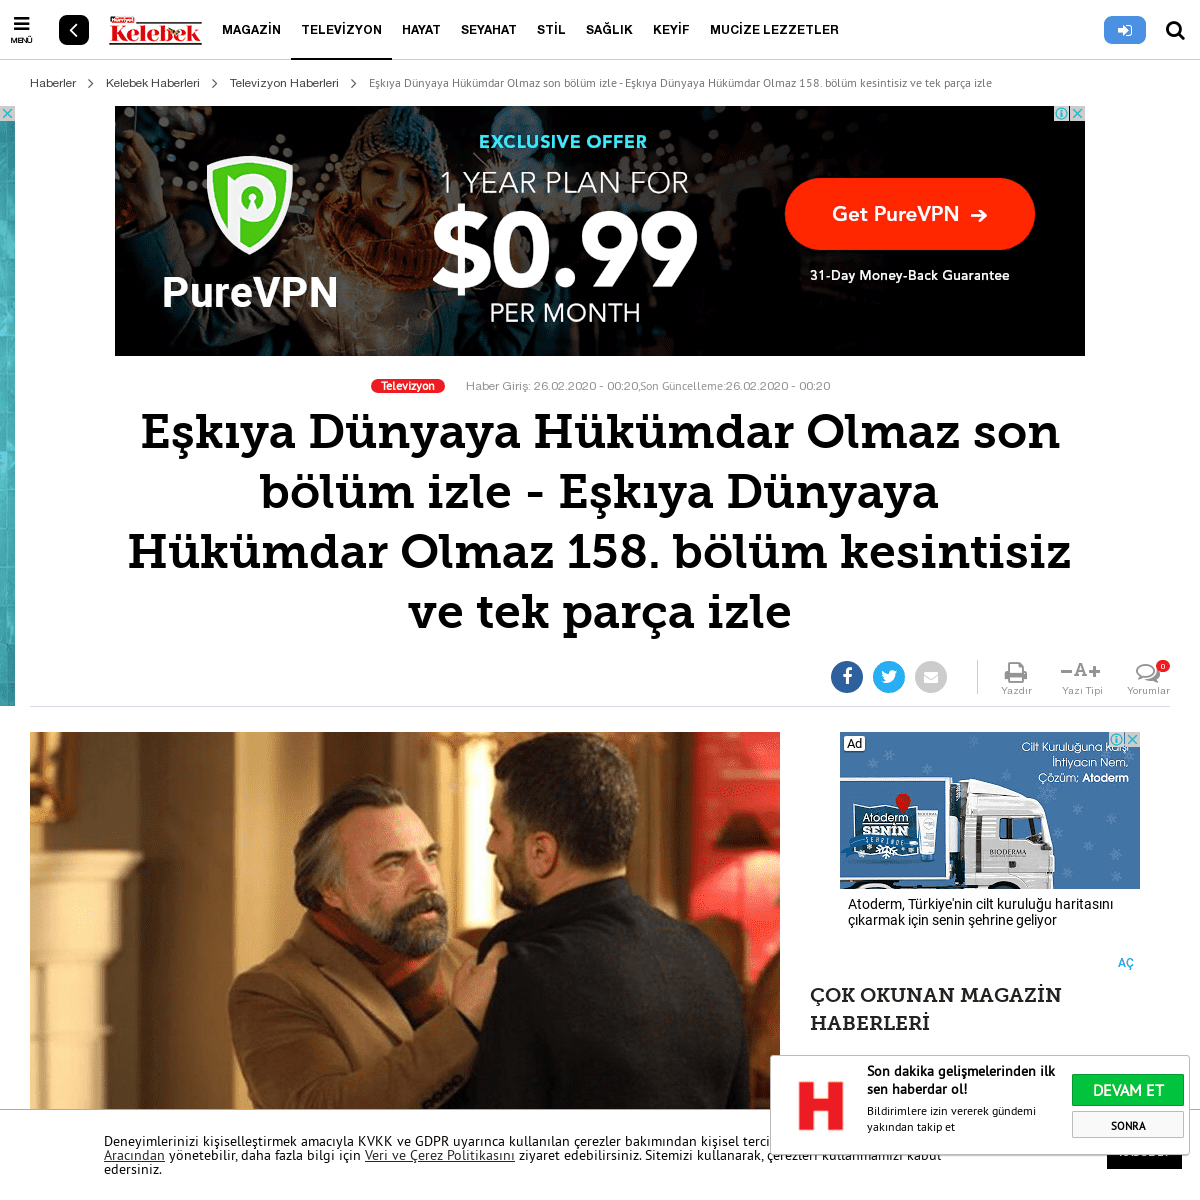 A complete backup of www.hurriyet.com.tr/kelebek/televizyon/eskiya-dunyaya-hukumdar-olmaz-son-bolum-izle-eskiya-dunyaya-hukumdar